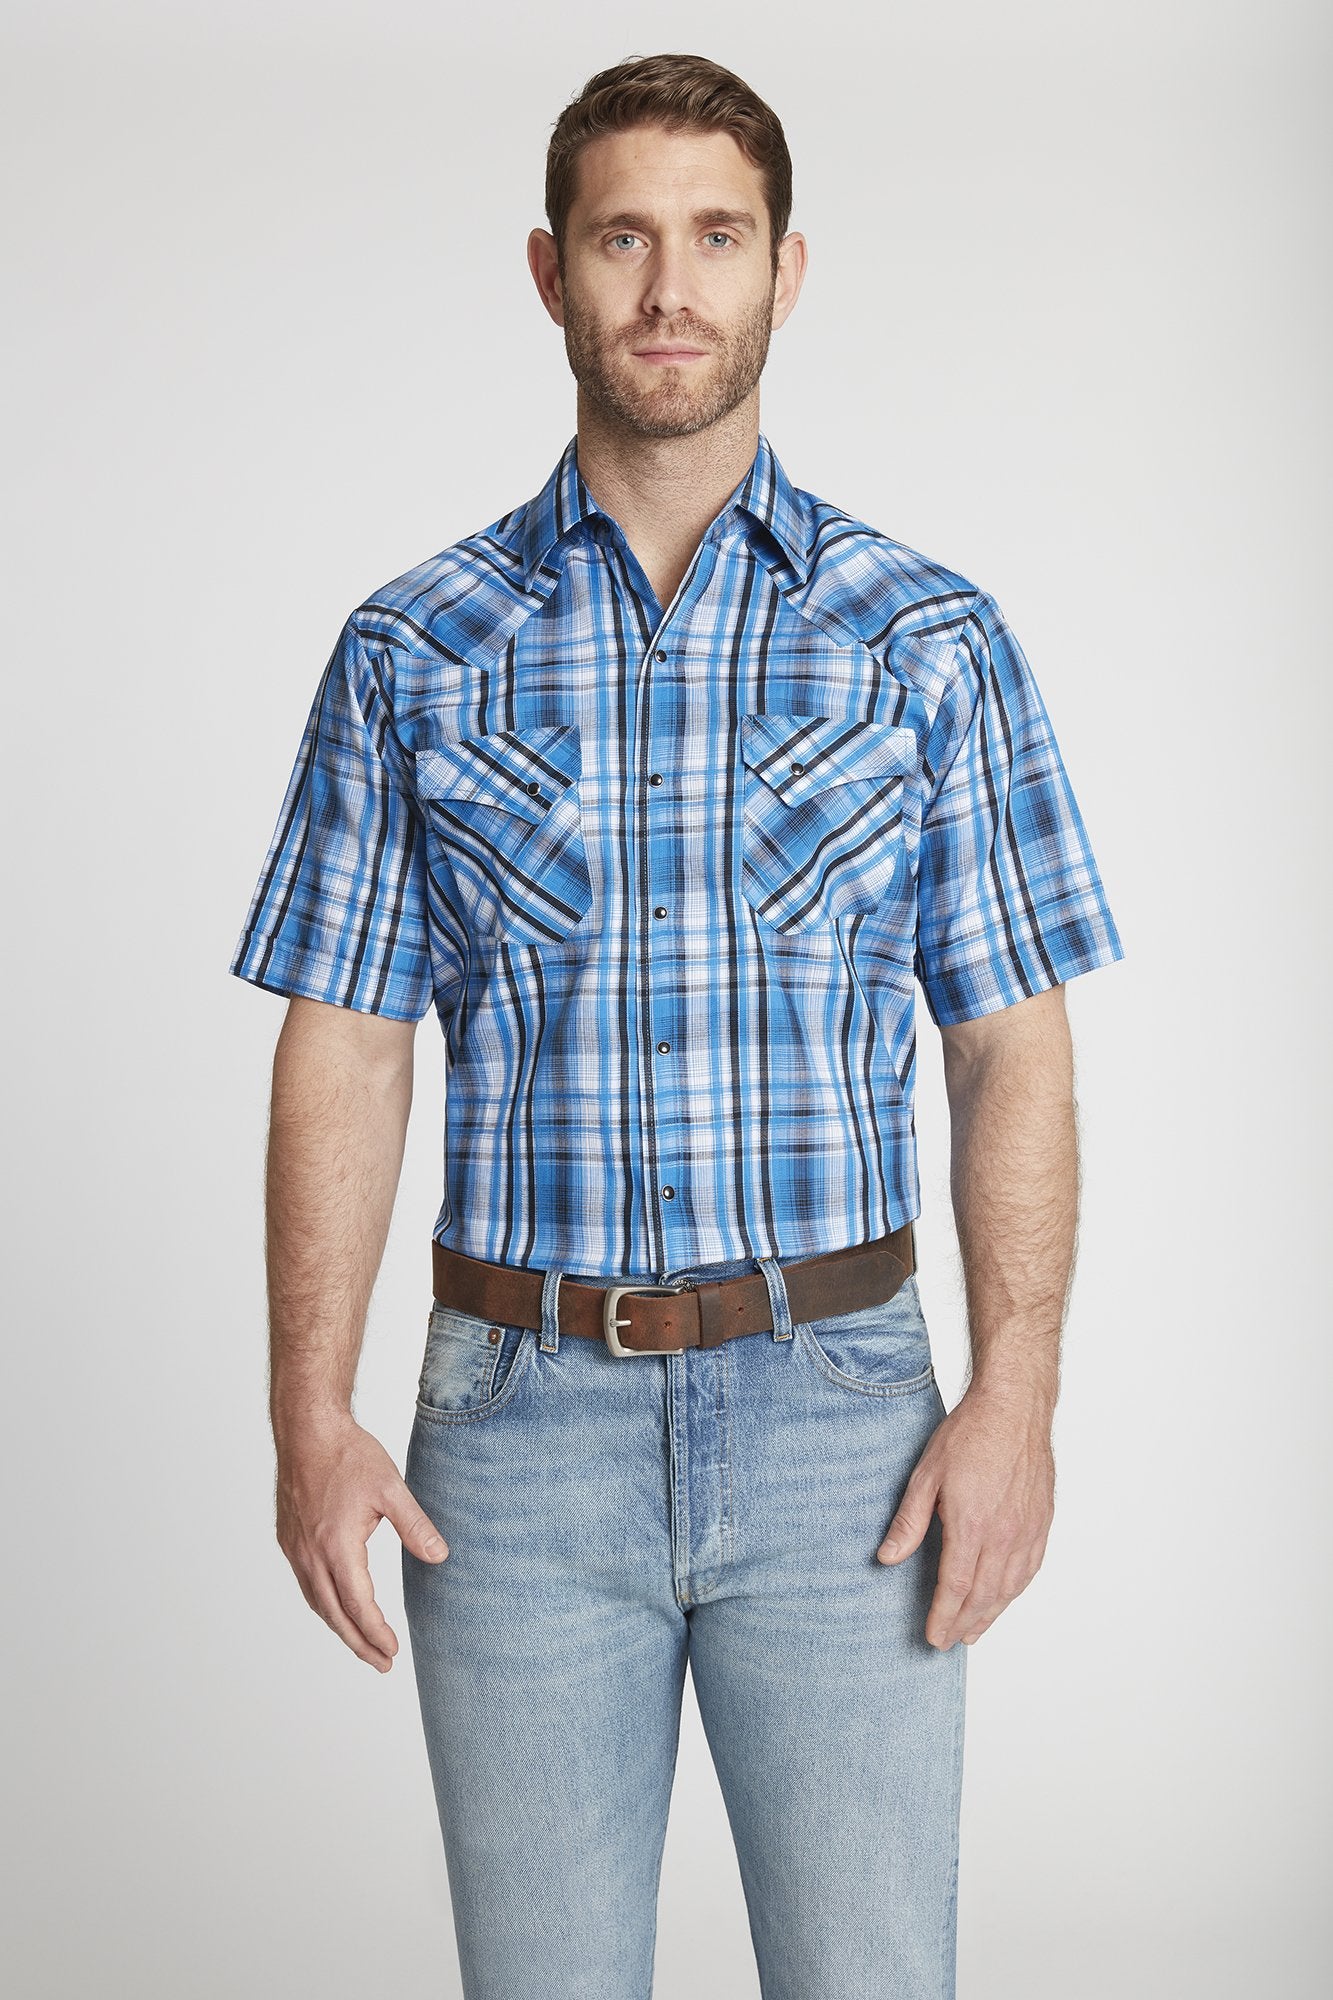 Men's Western Wear | Western Shirts | Ely Cattleman Tagged 